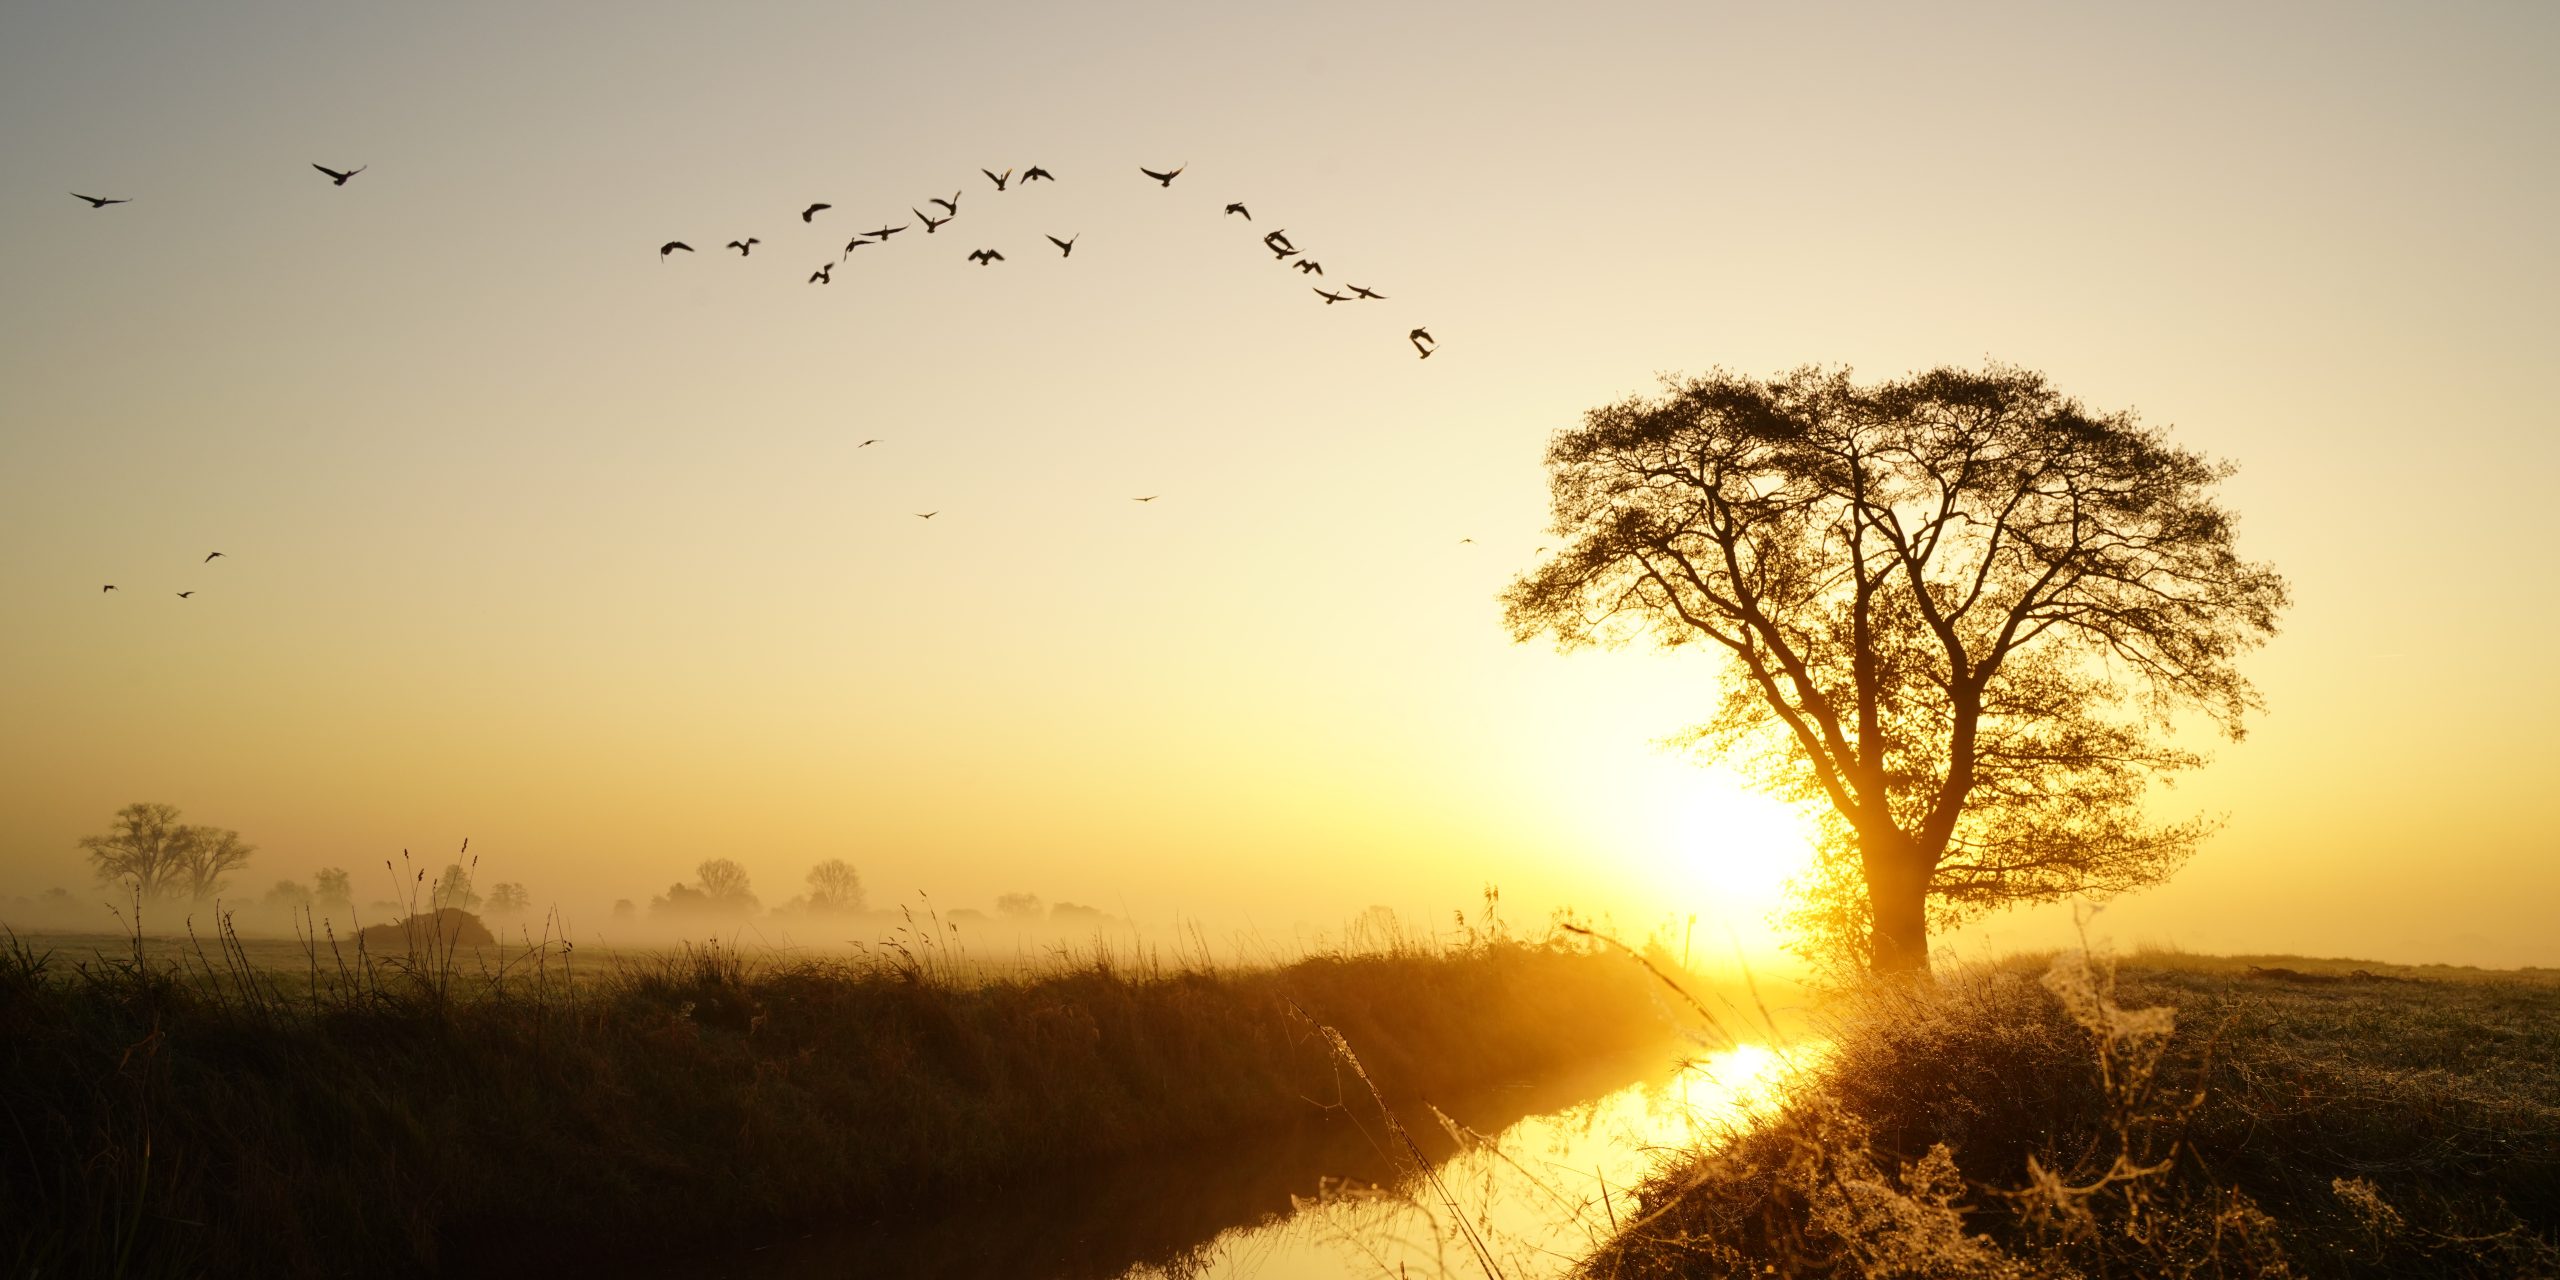 Sunrise with flock of birds